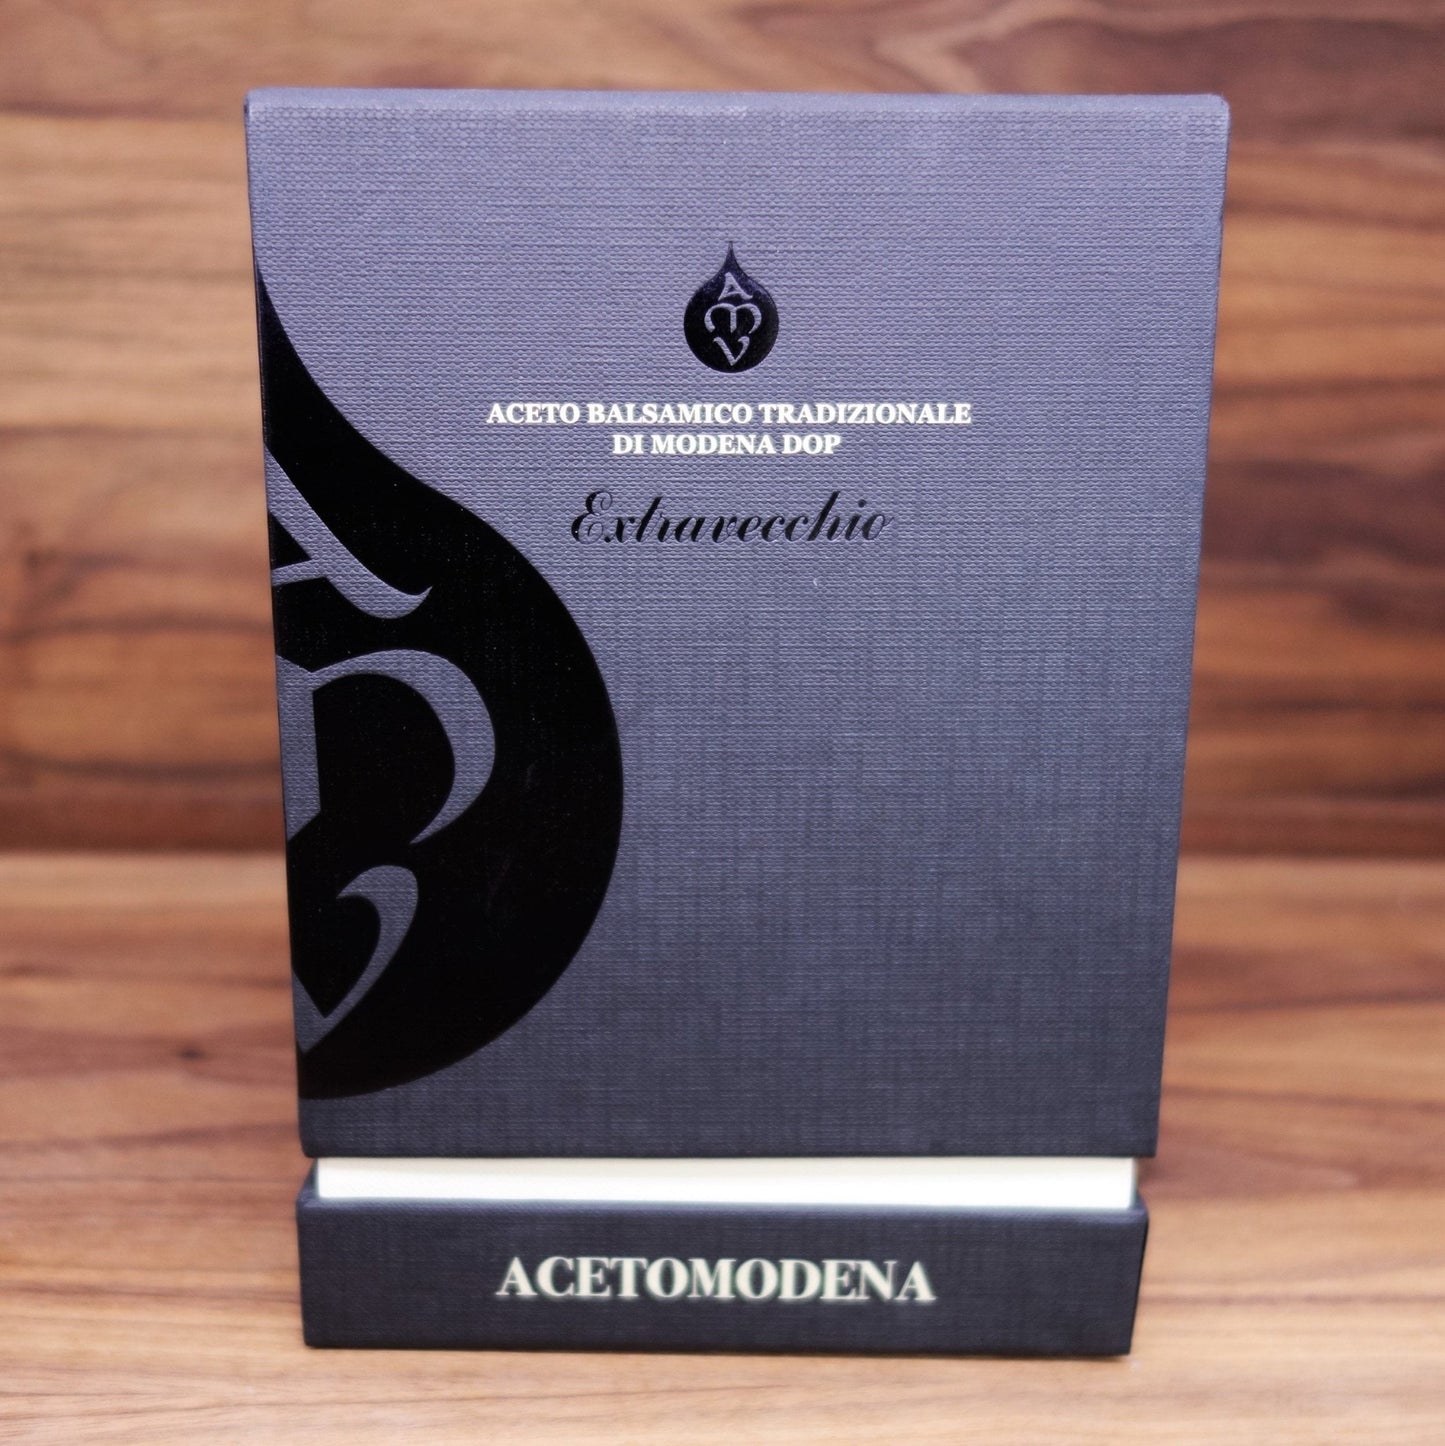 Acetomodena Extra Vecchio Balsamic 25 Year - Mongers' Provisions